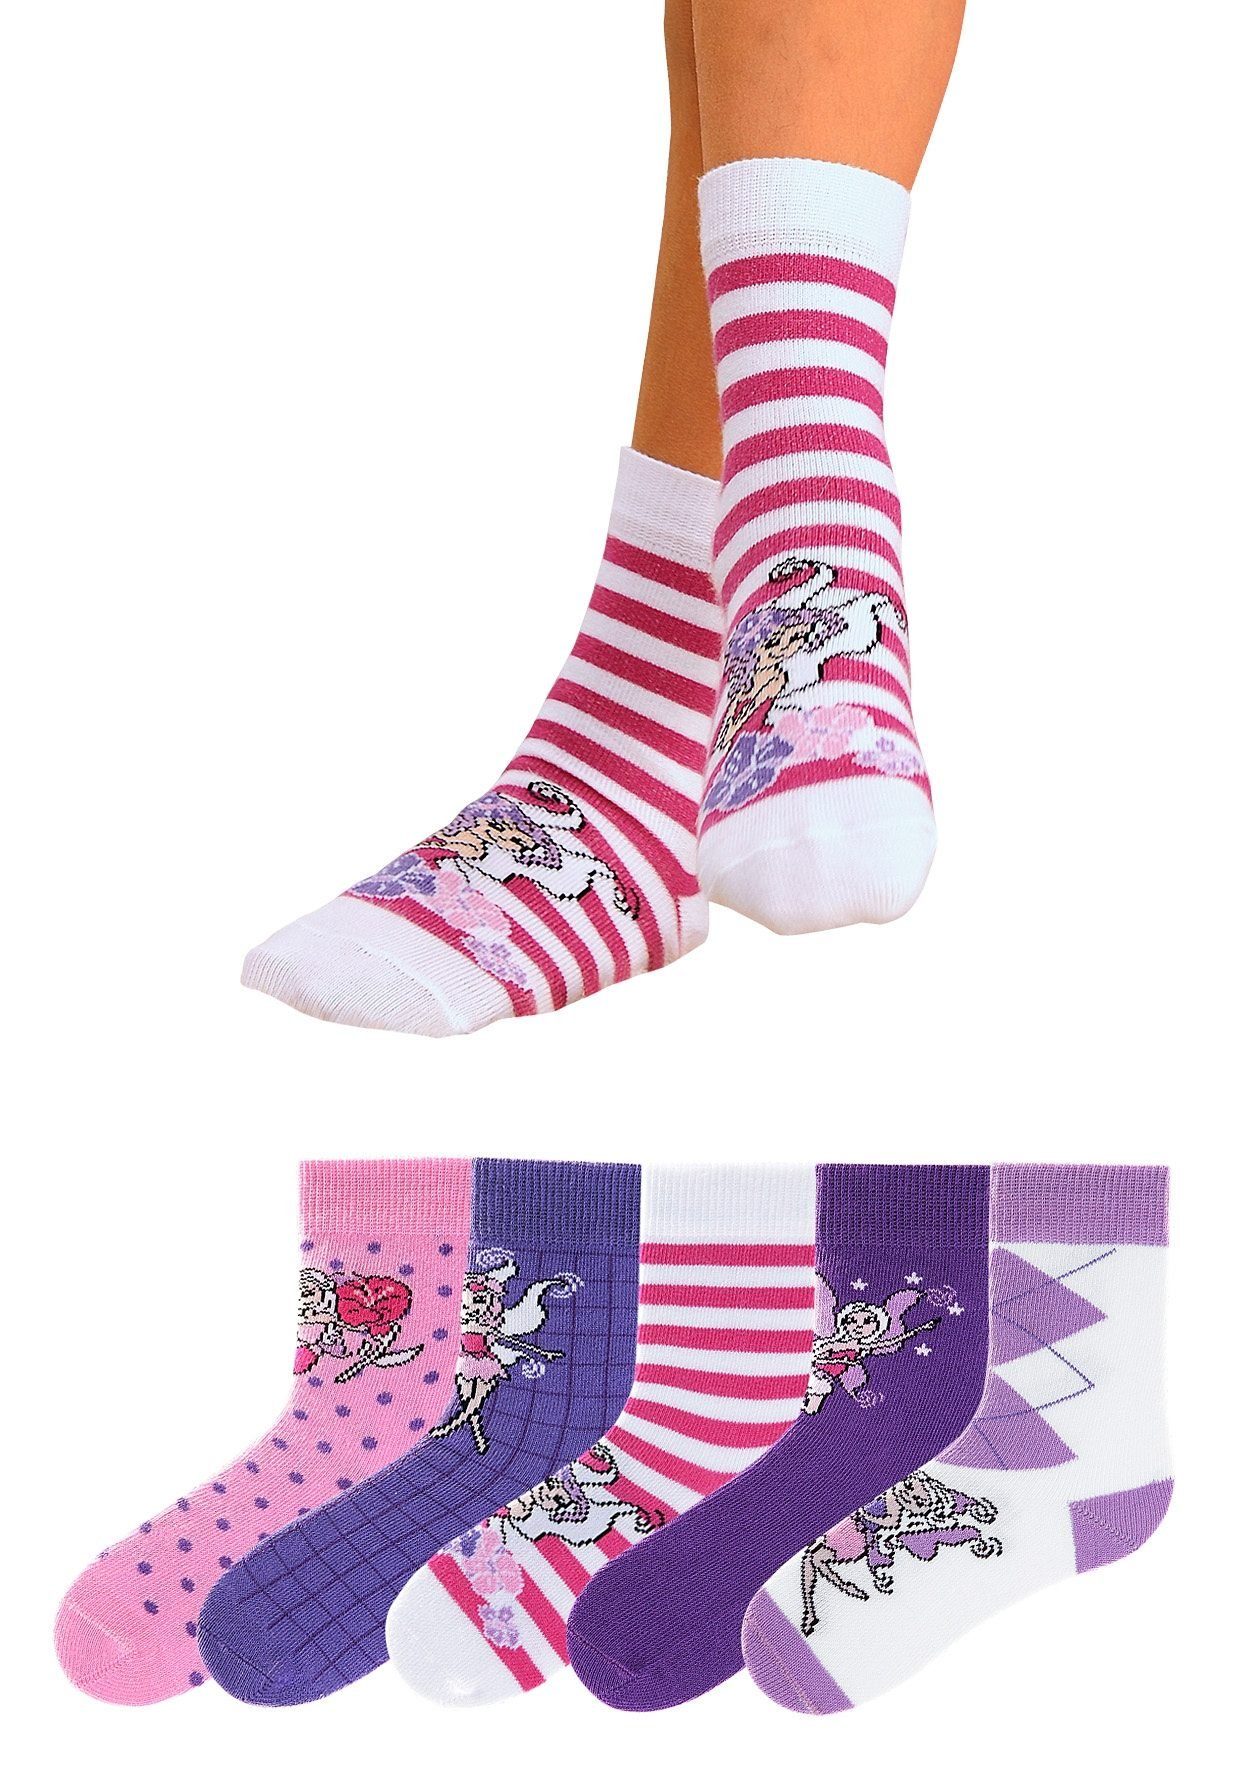 (5-Paar) Socken 5 Designs farbenfrohen H.I.S in